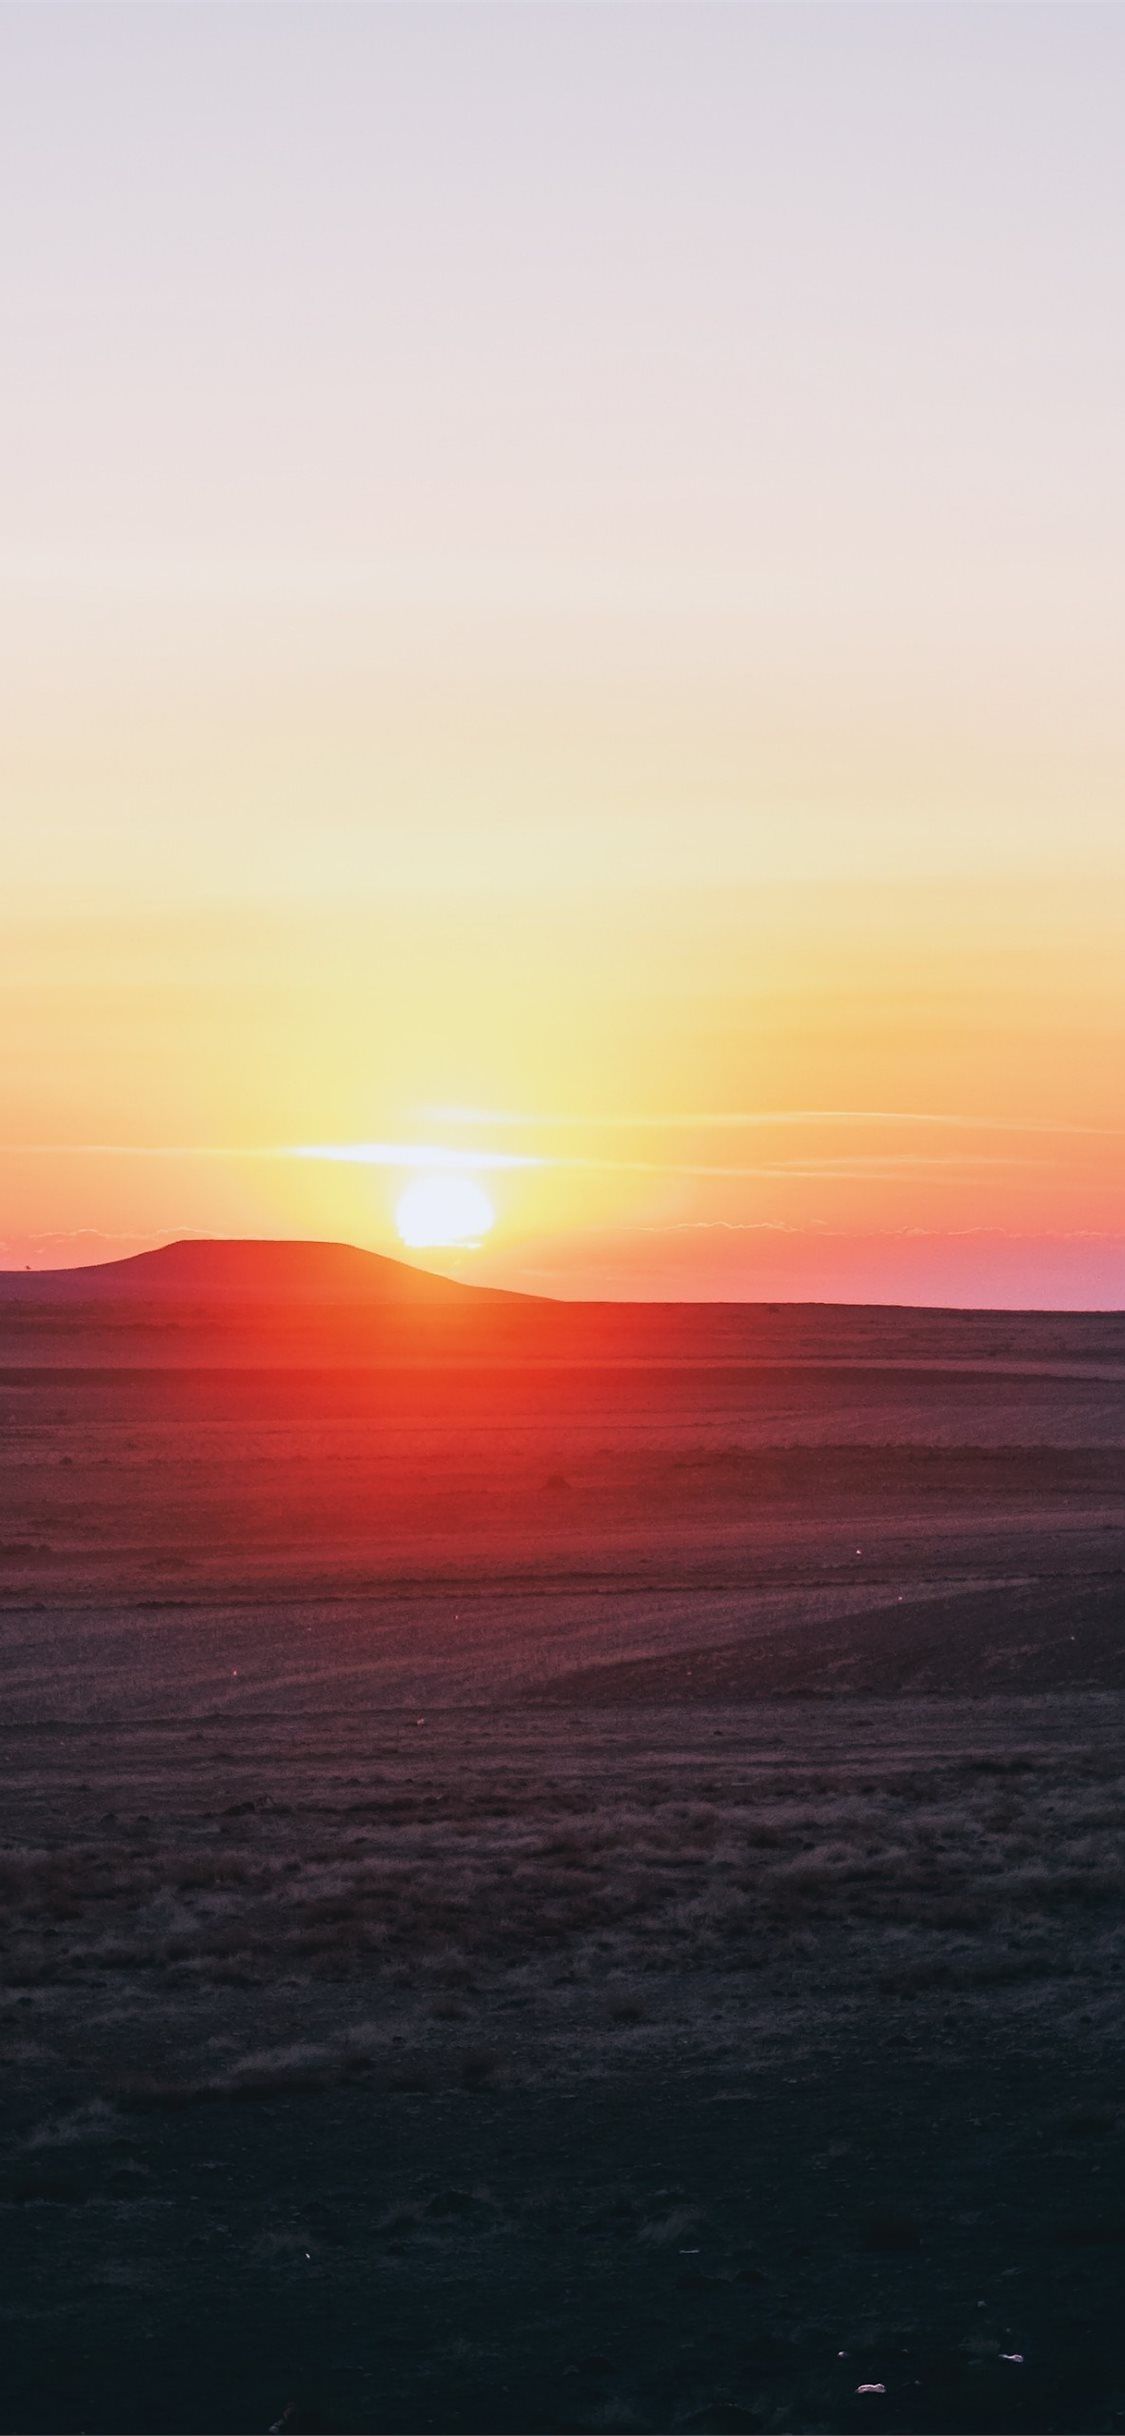 Turkey Cappadocia Sunset Clean Sky iPhone Wallpaper Free Download